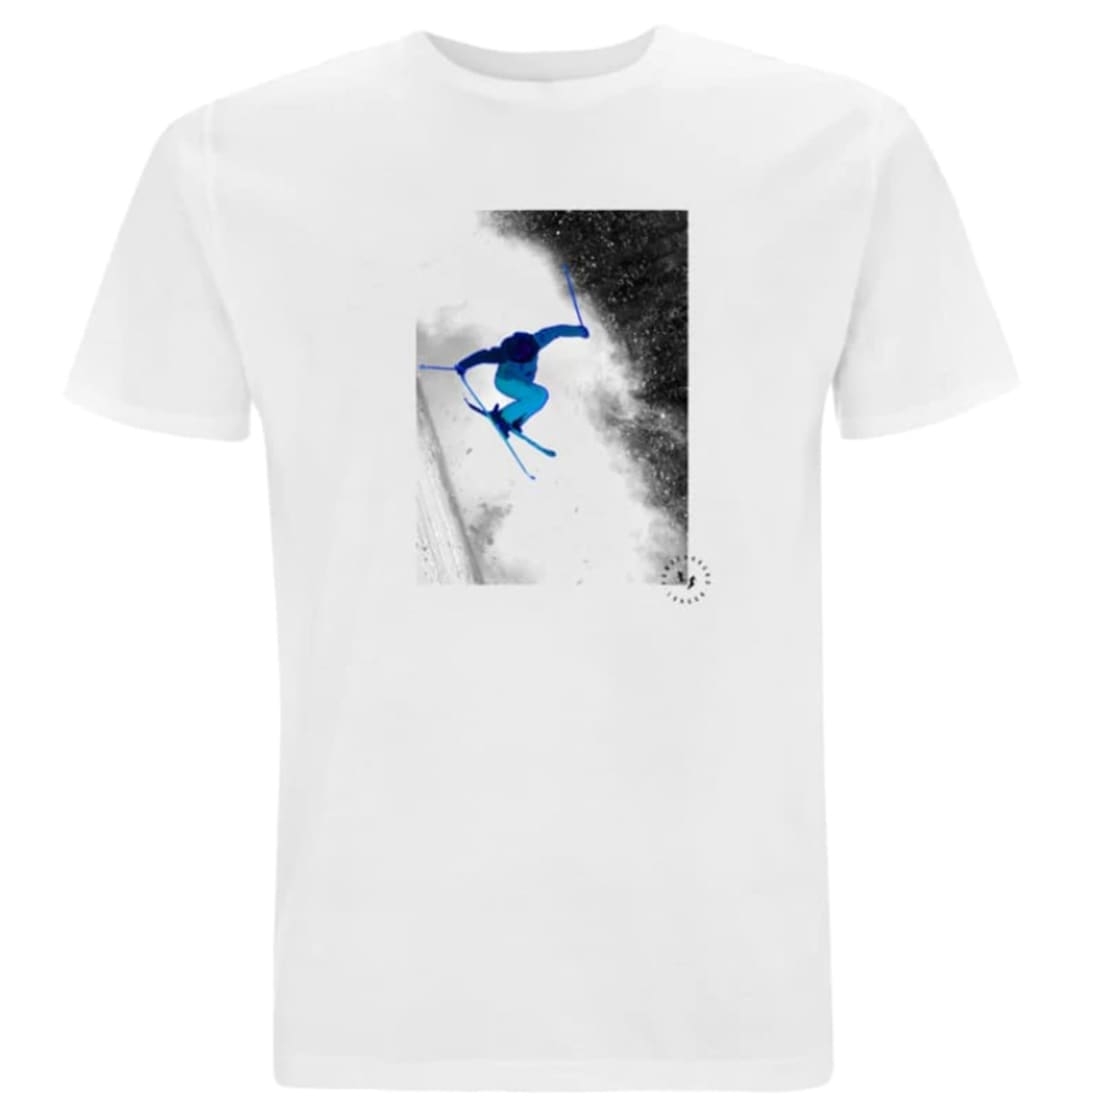 Powderhound Unisex T Shirt, Blue Skier, SMALL – Powderhound